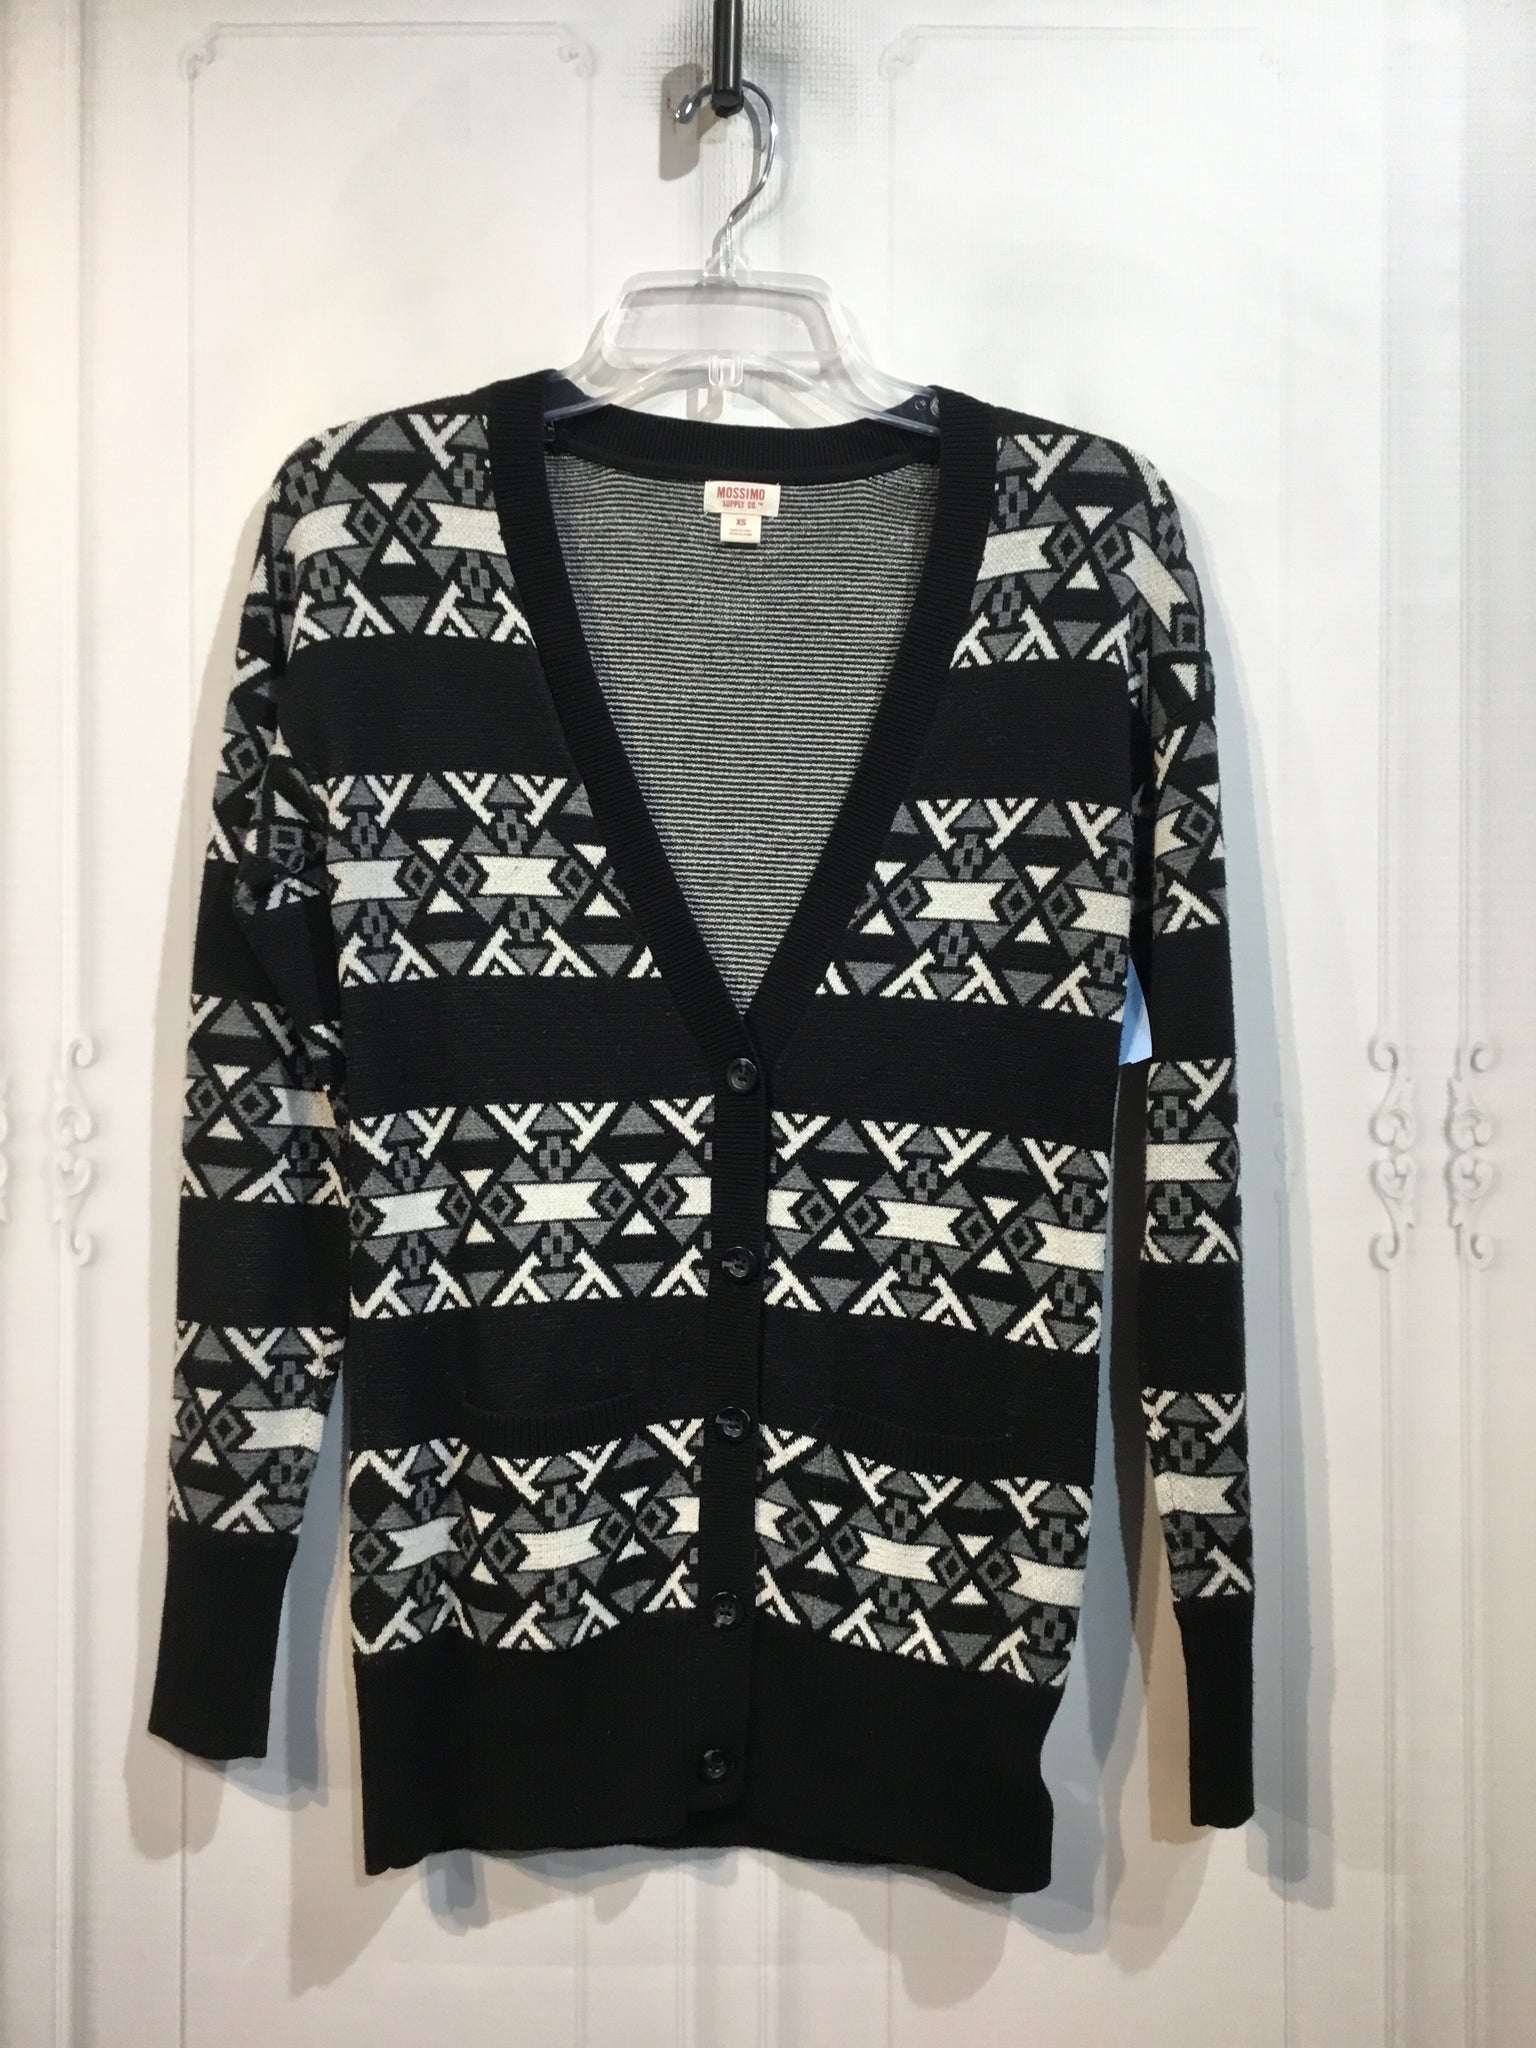 Mossimo Size XS/0-2 Black/White/Grey Sweater